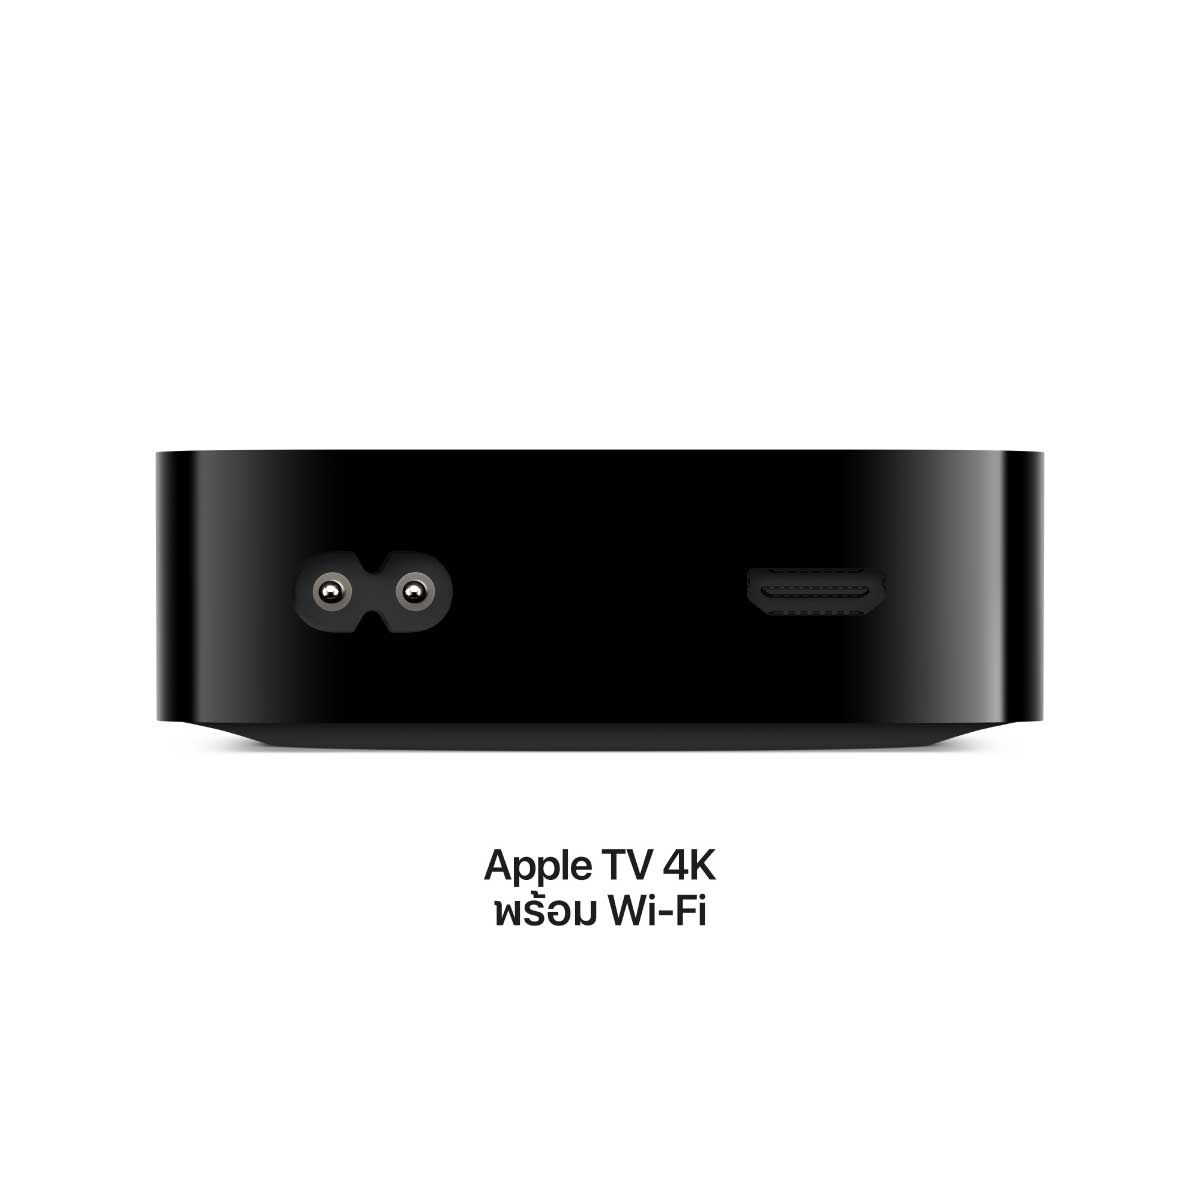 Apple TV 4K รุ่น Wi-Fi + Ethernet